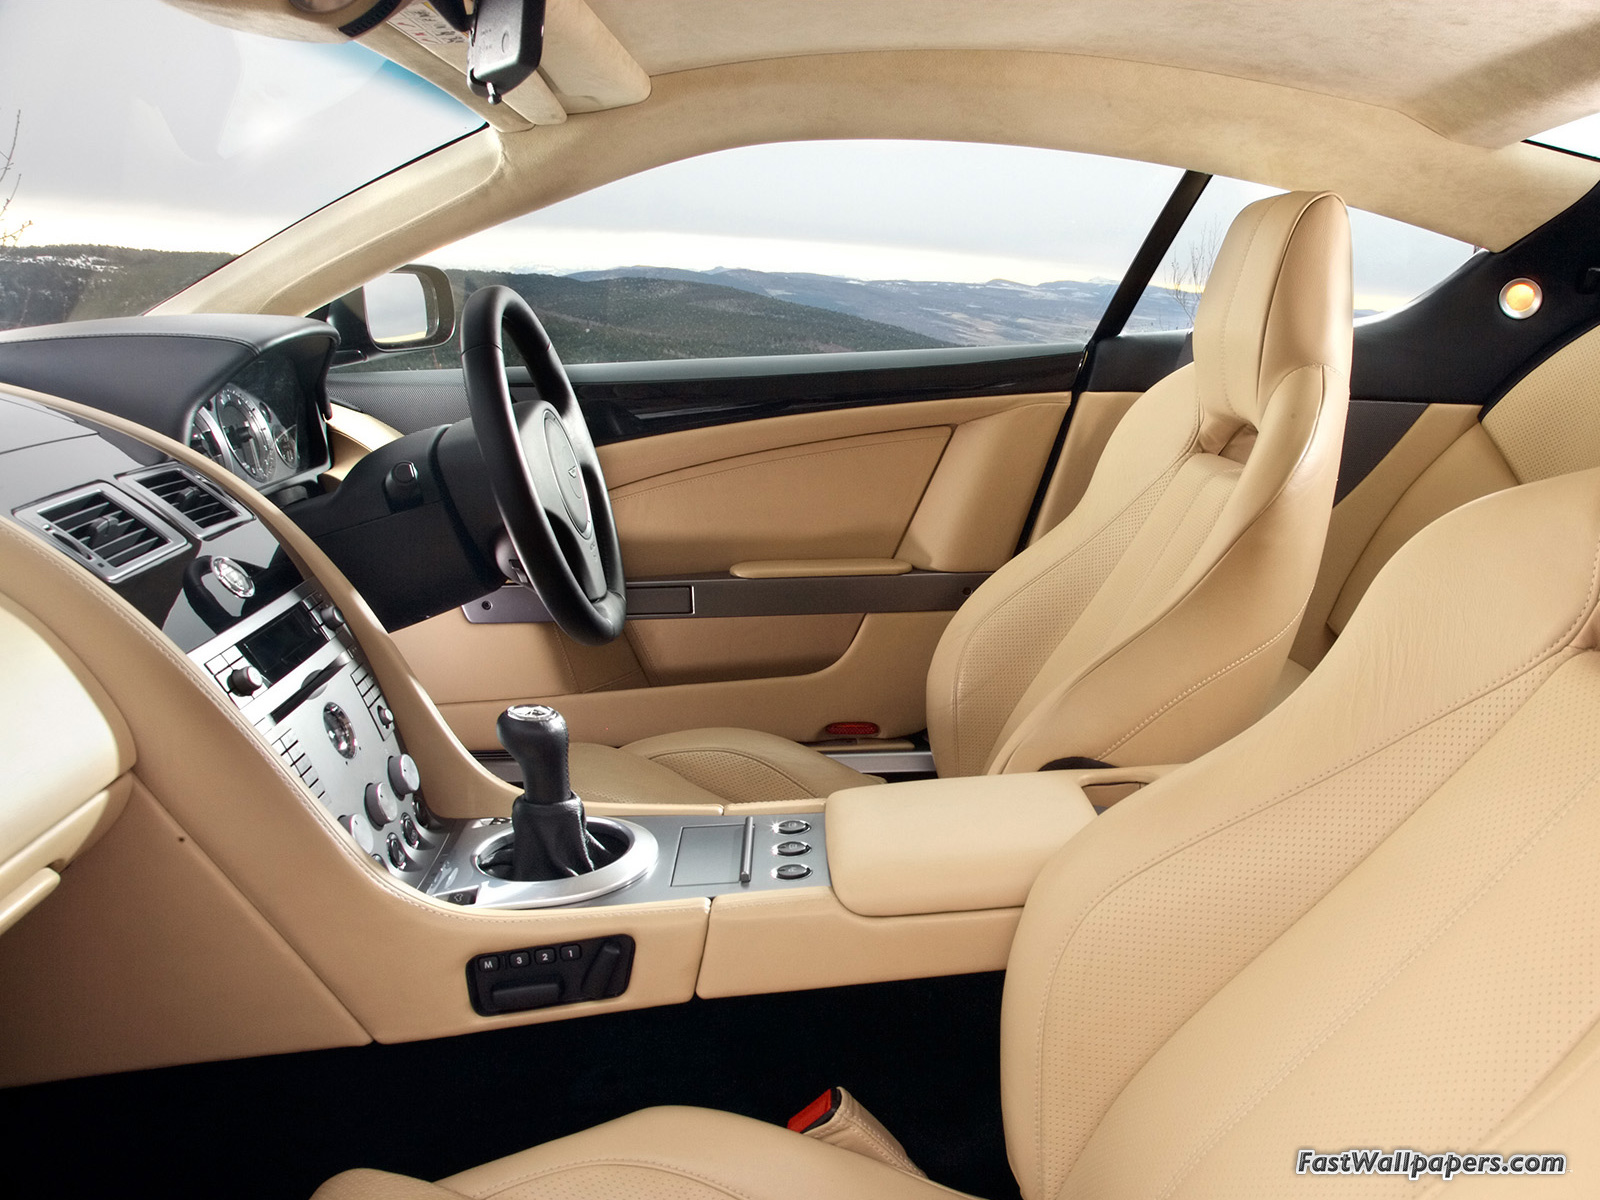   Gambar Interior Mobil Toyota Alphard ~ Download Image